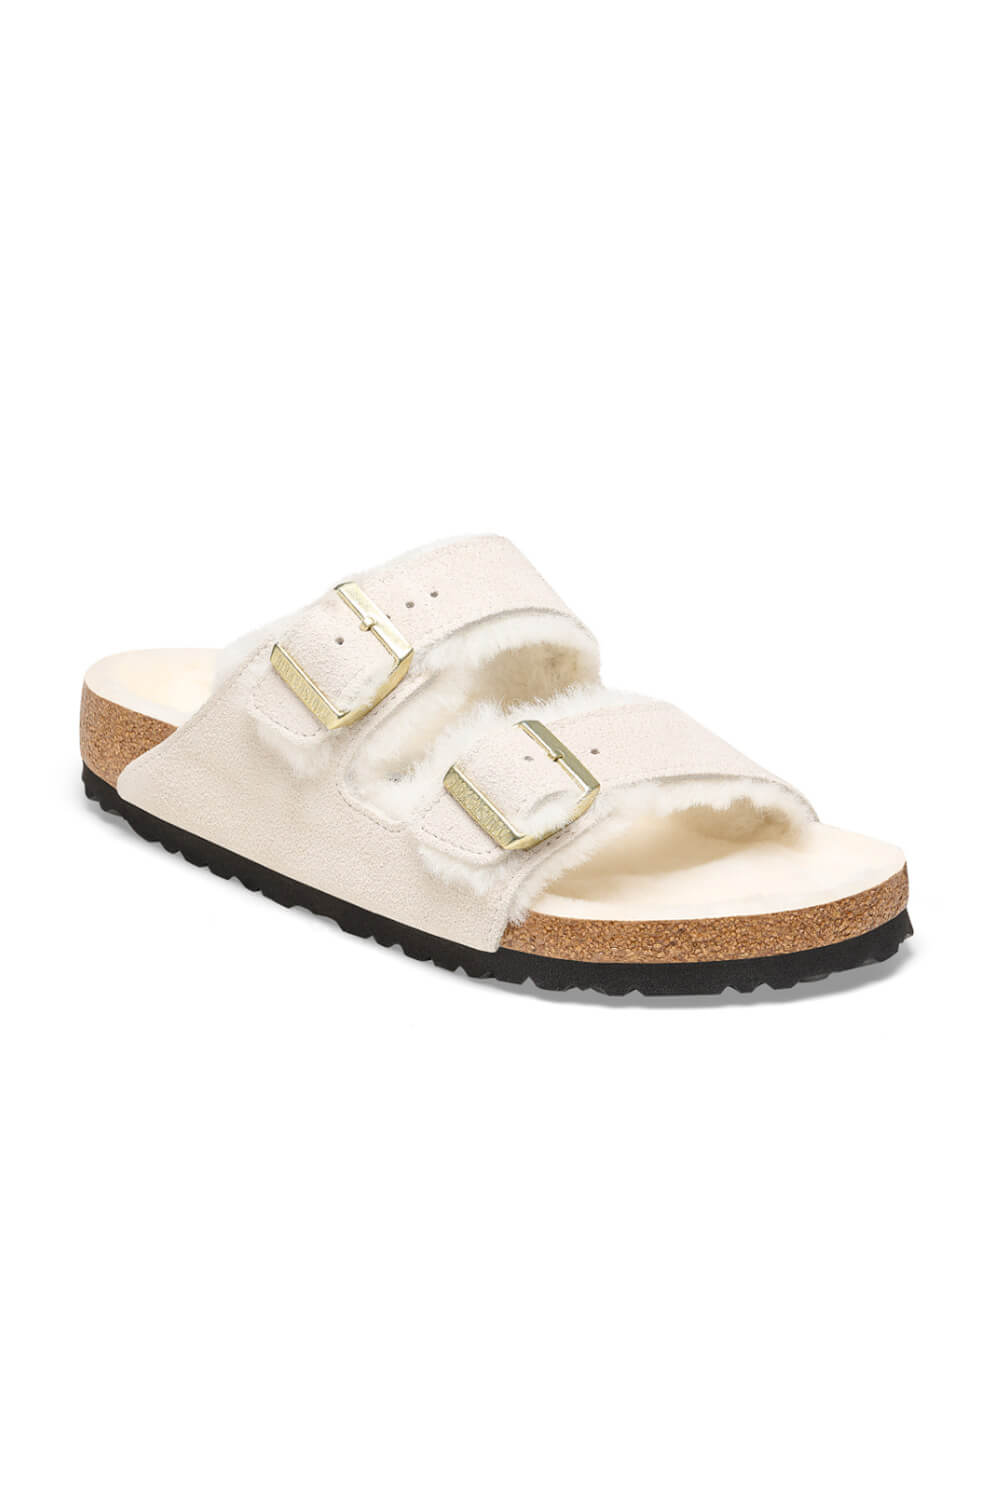 Womens Birkenstock Arizona Soft Footbed Sandal - Antique White